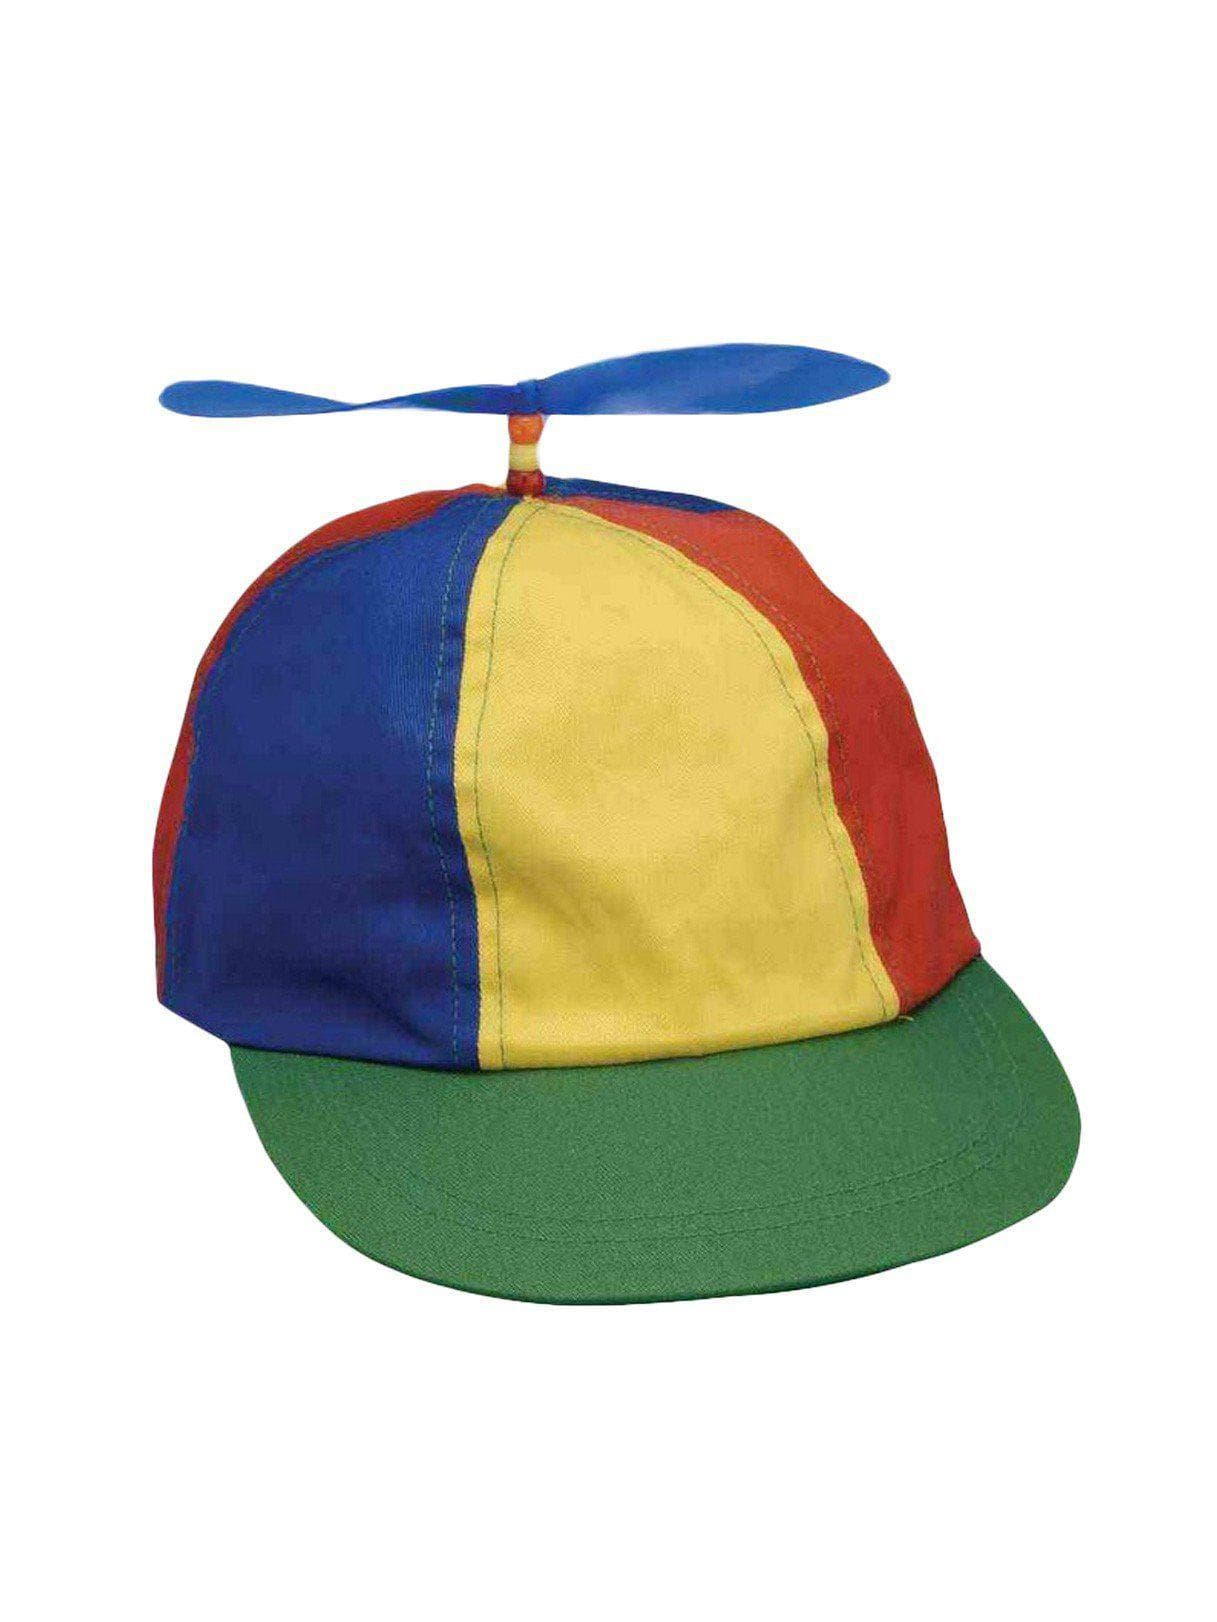 Adult Propeller Beanie Hat - costumes.com